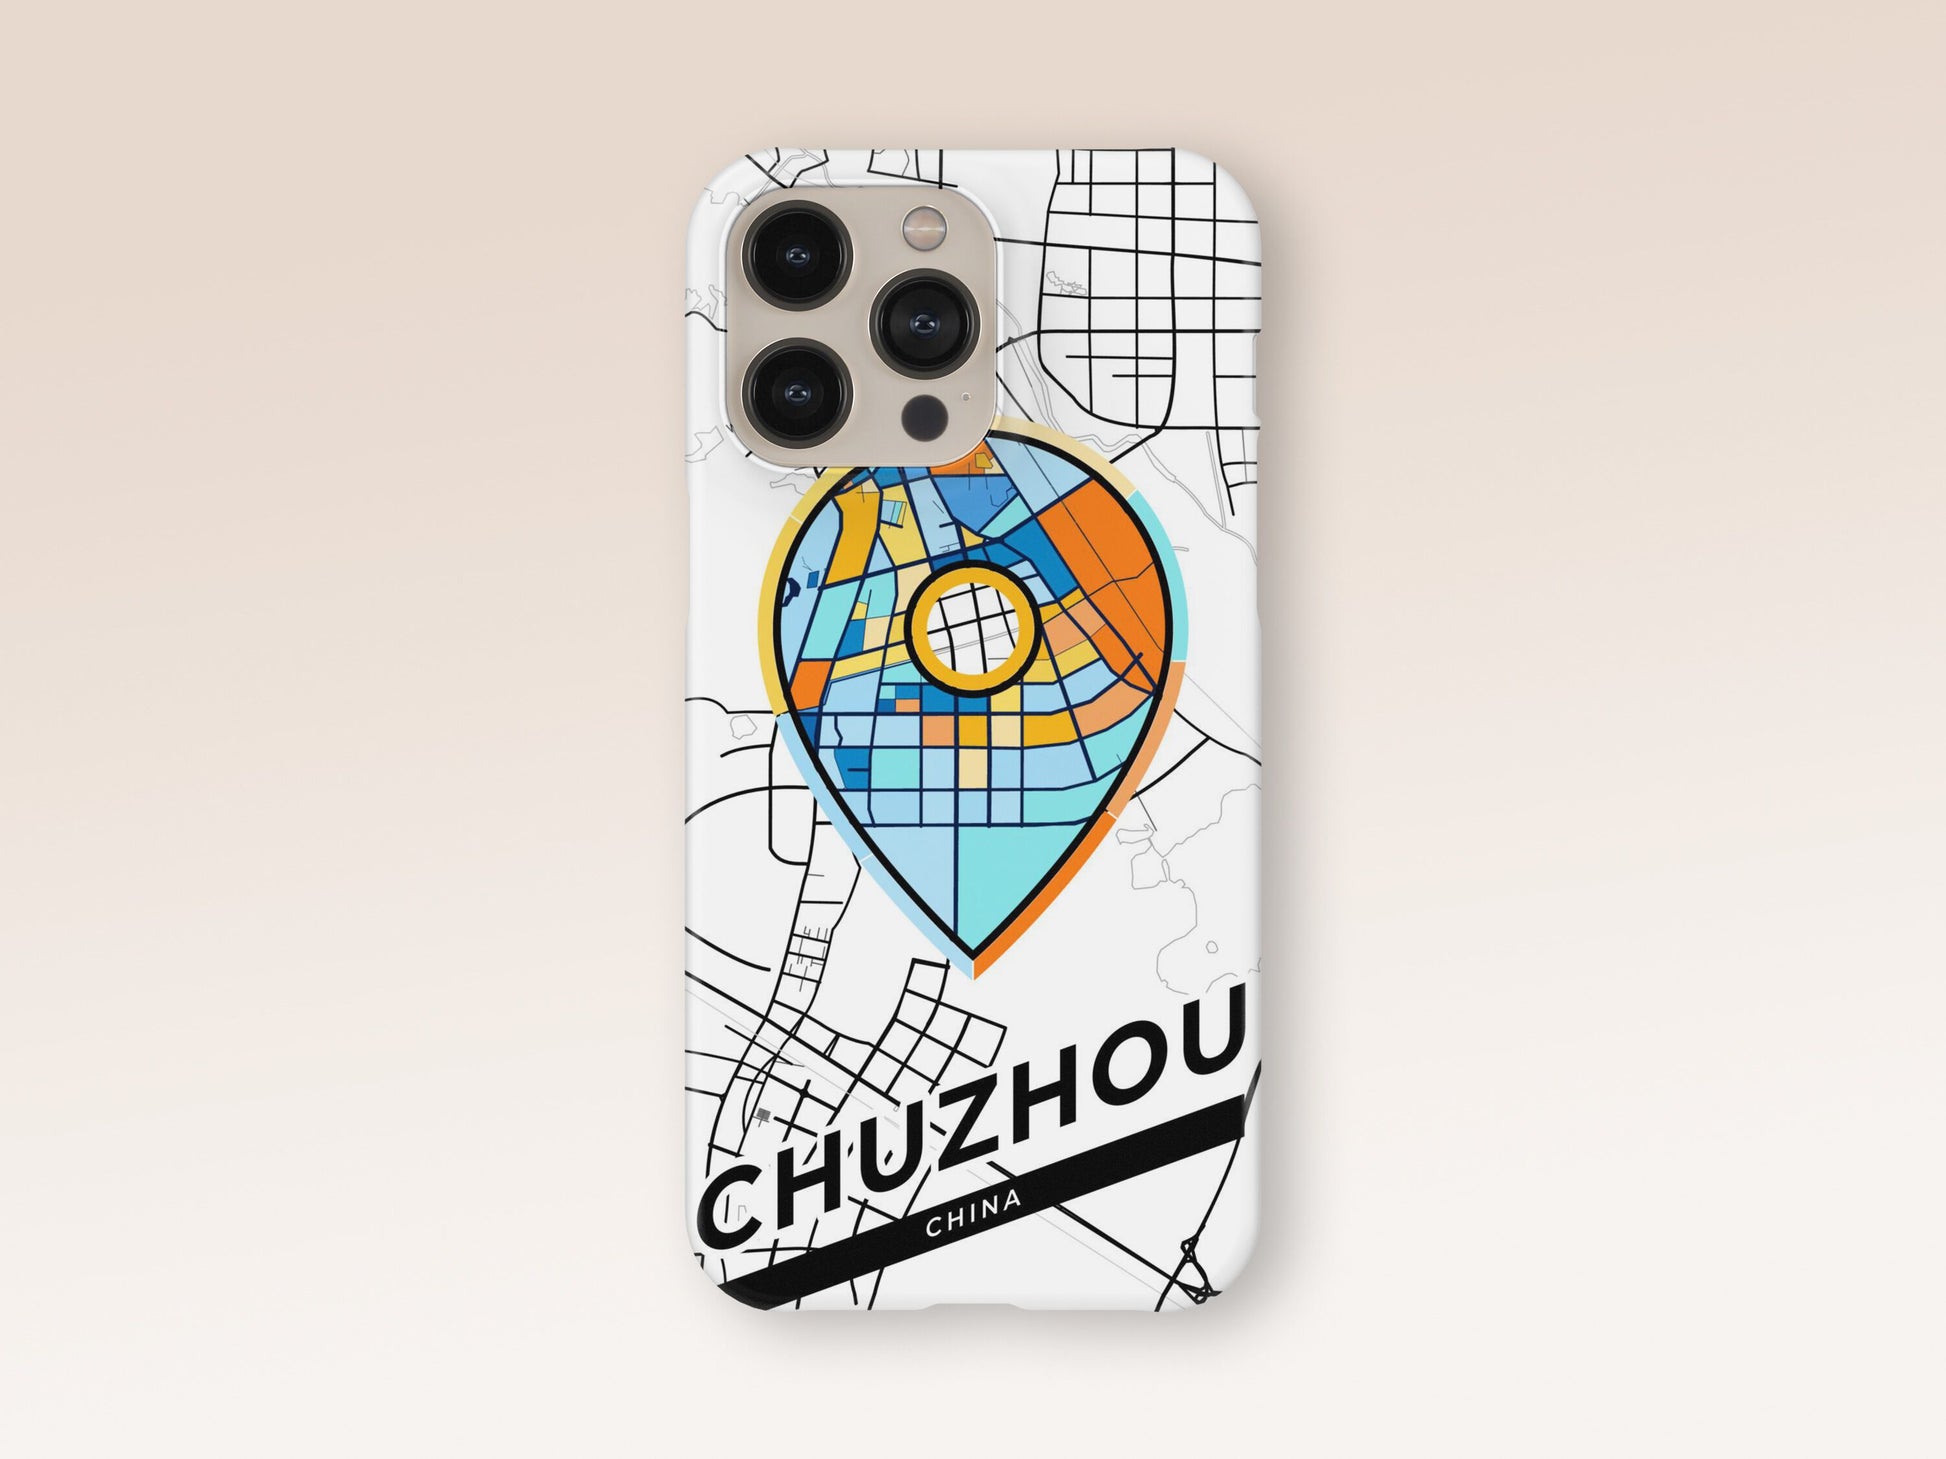 Chuzhou China slim phone case with colorful icon. Birthday, wedding or housewarming gift. Couple match cases. 1